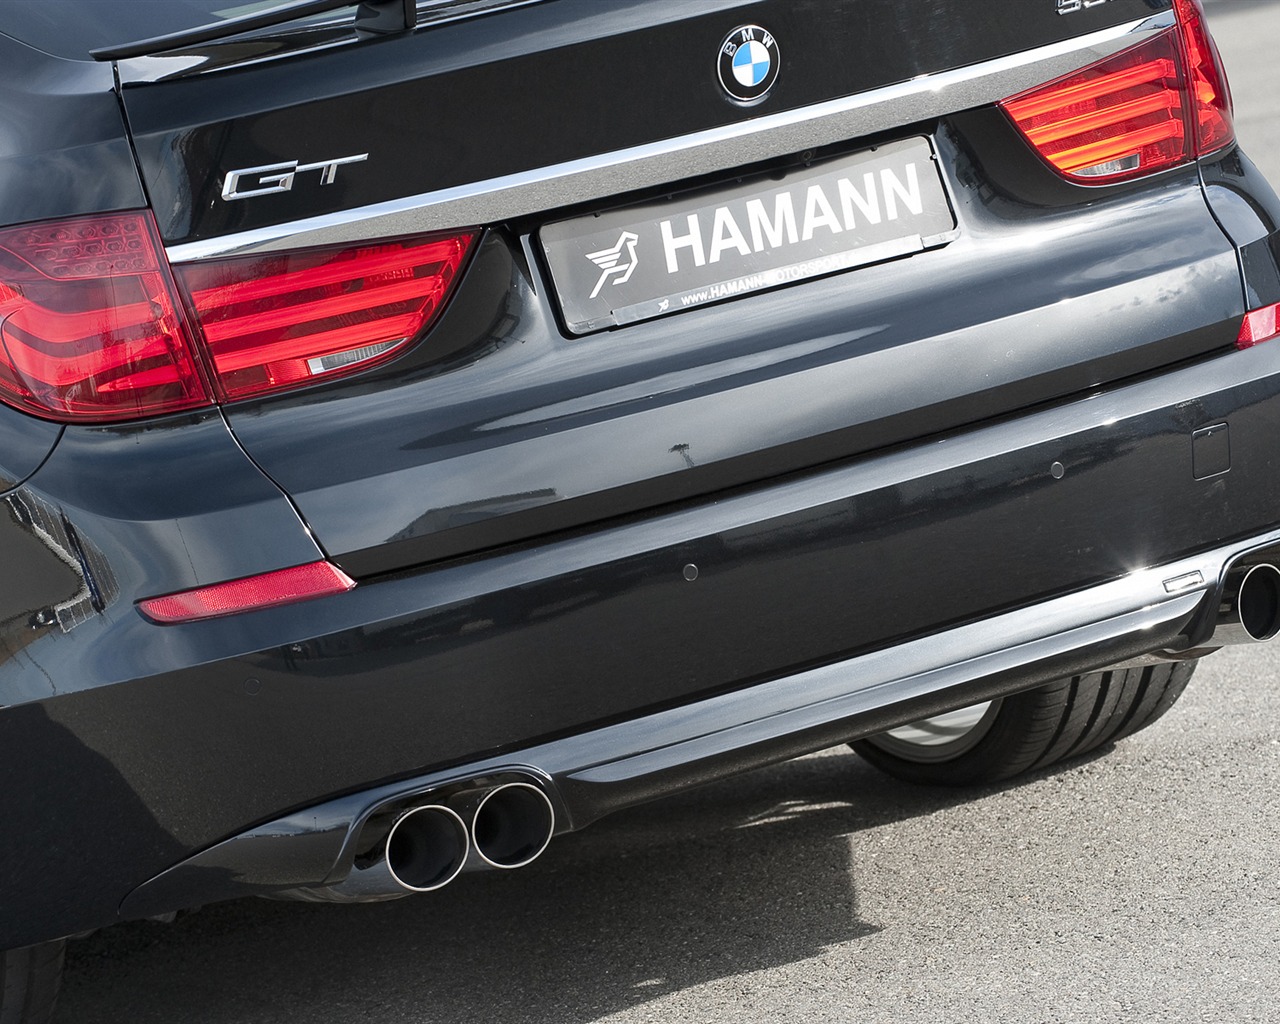 Hamann BMW 5-Series Gran Turismo - 2010 宝马23 - 1280x1024